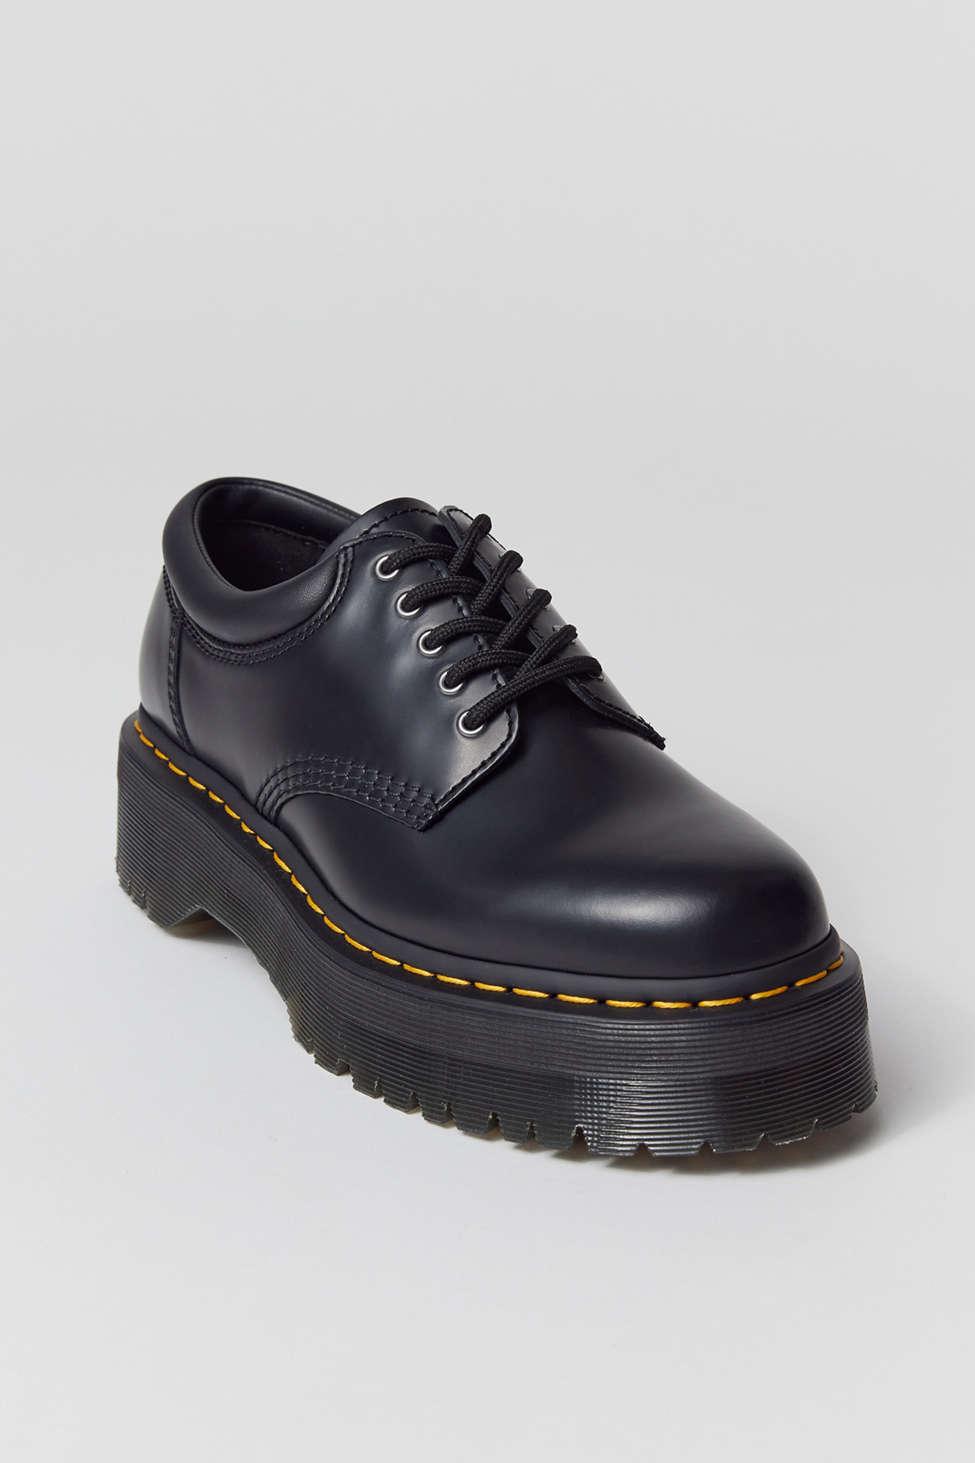 Dr. Martens 8053 Quad 5-eye Oxford Shoe in Black | Lyst